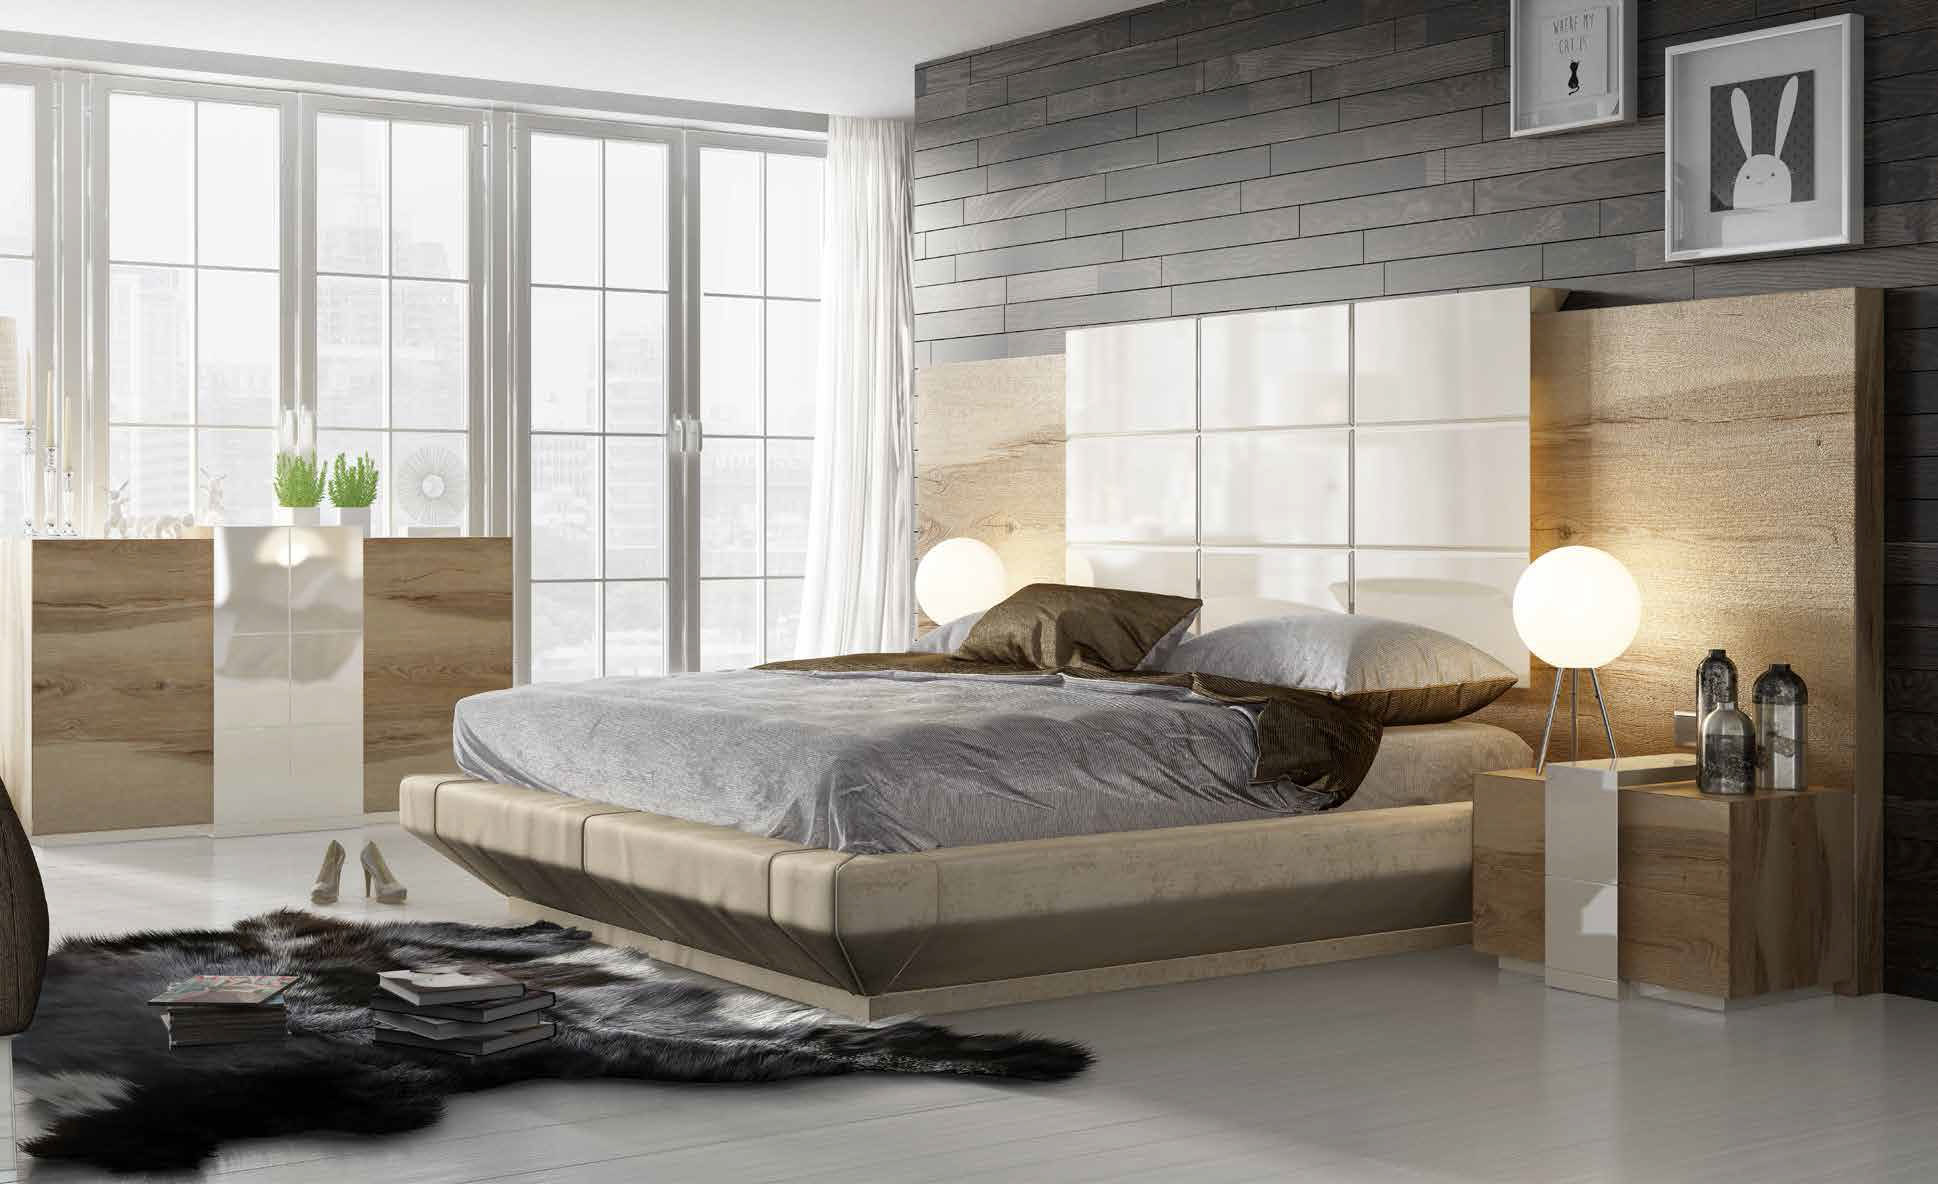 Brands Franco Furniture Bedrooms vol3, Spain DOR 04